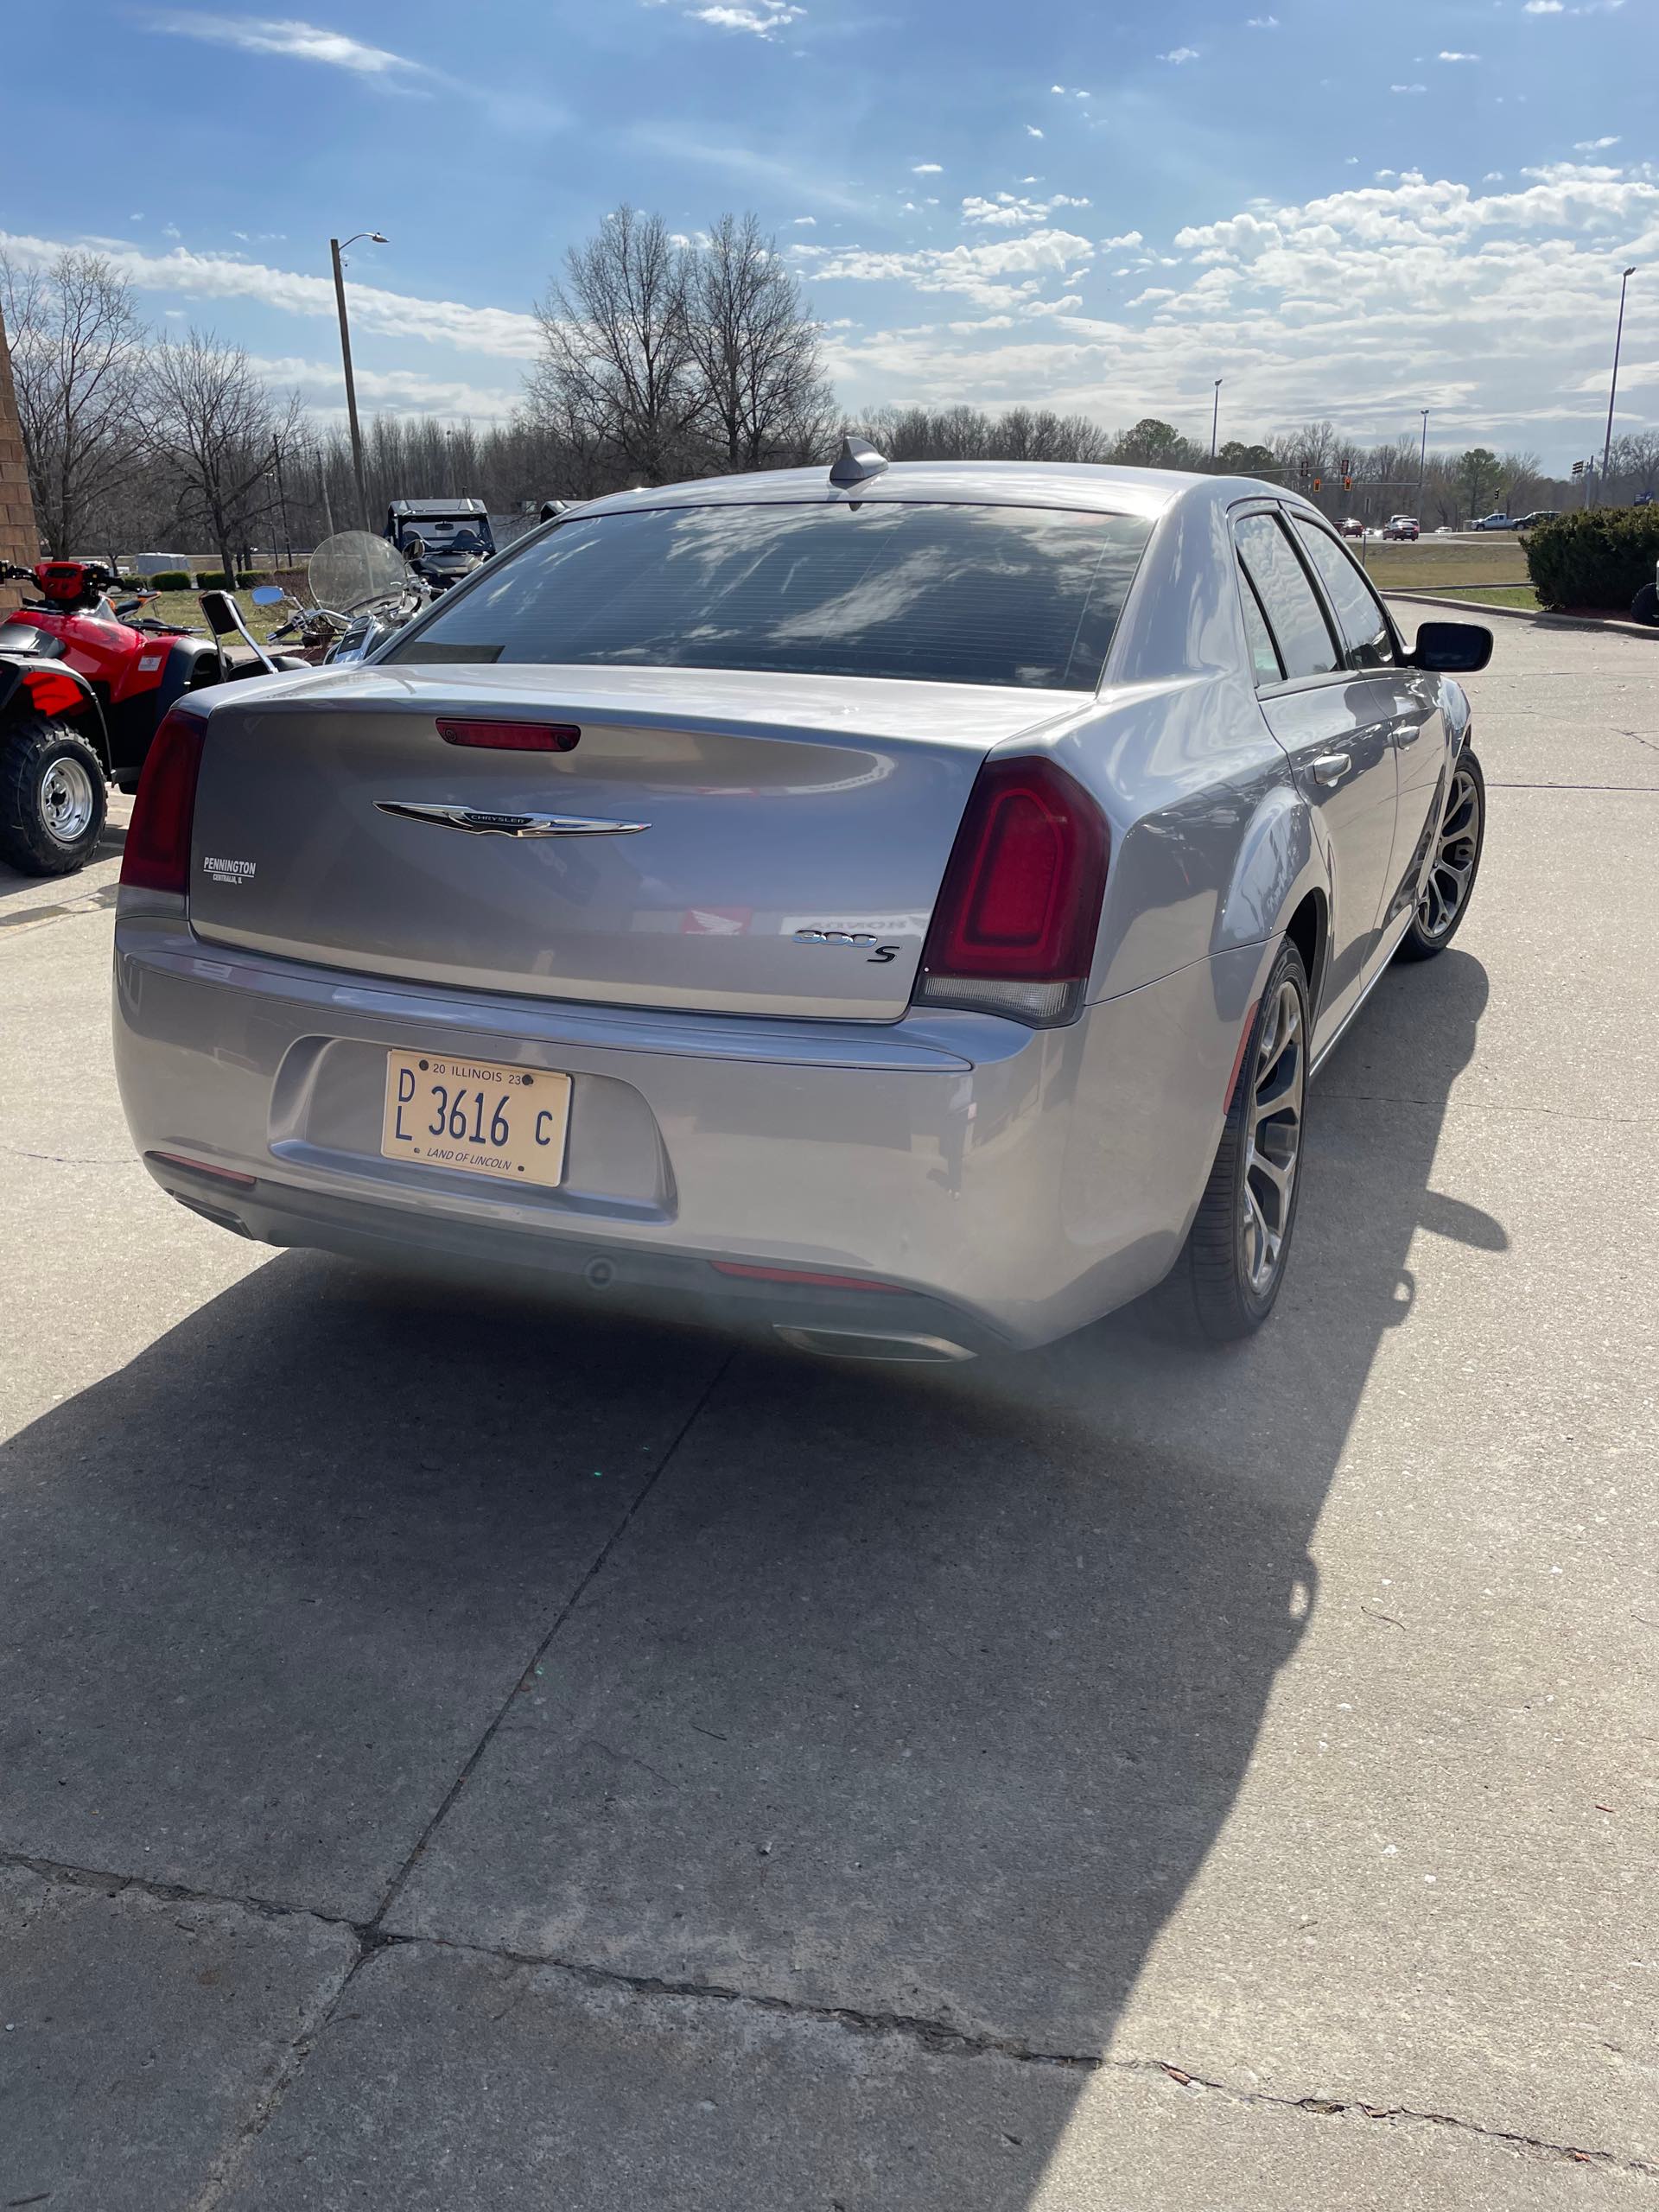 2018 Chrysler 300 at Southern Illinois Motorsports